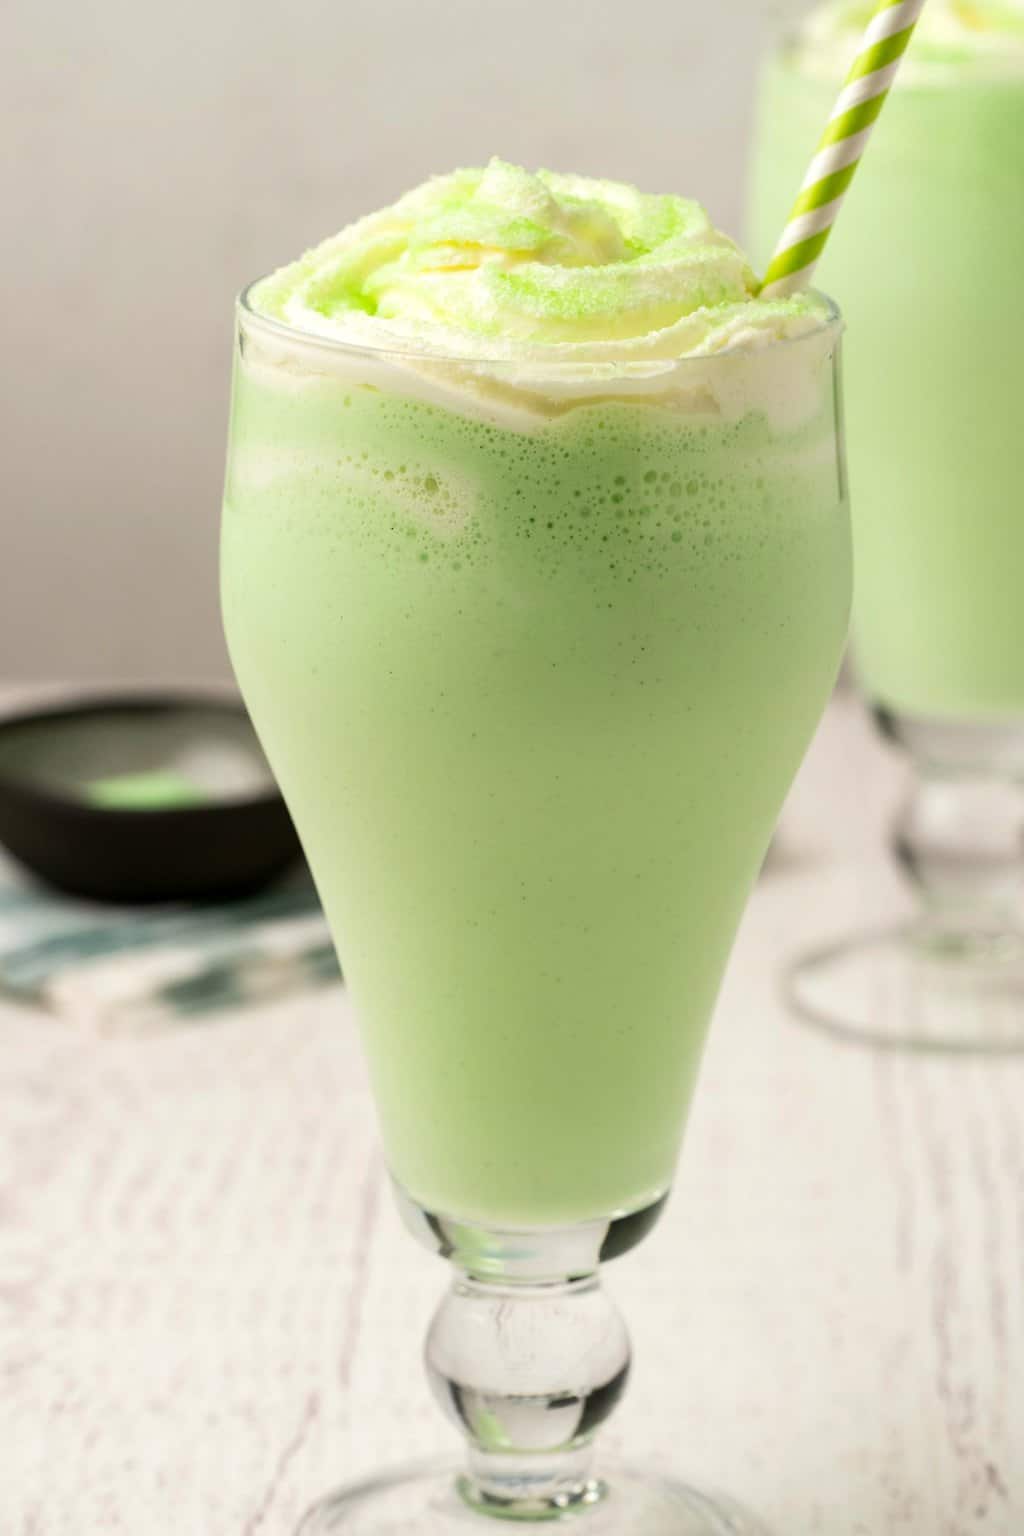 Vegan shamrock shake topped with whipped cream and green sanding sugar. 